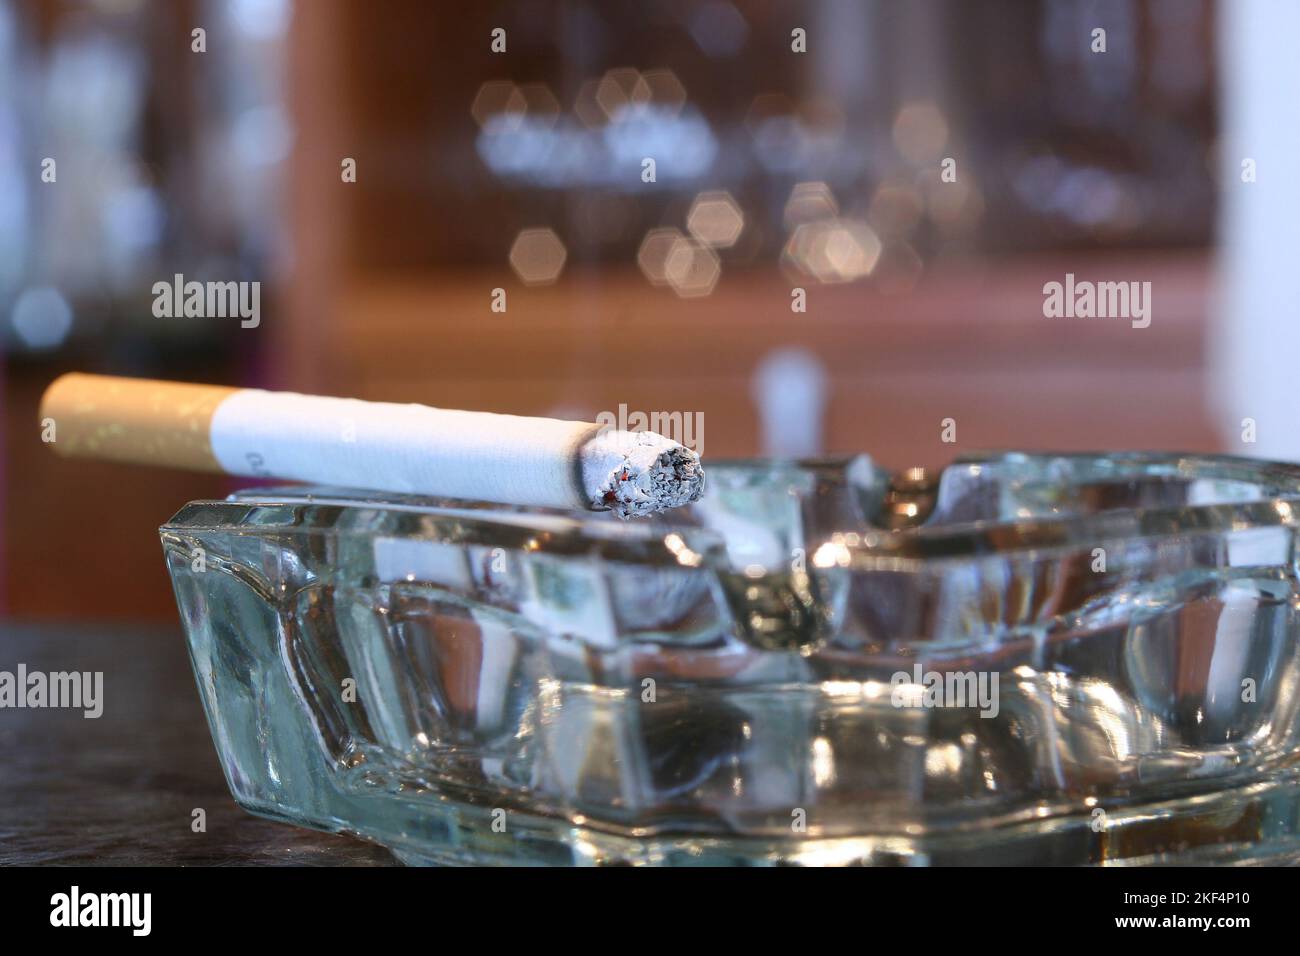 https://c8.alamy.com/comp/2KF4P10/bitte-nicht-rauchen-voller-aschenbecher-rauchverbot-2KF4P10.jpg